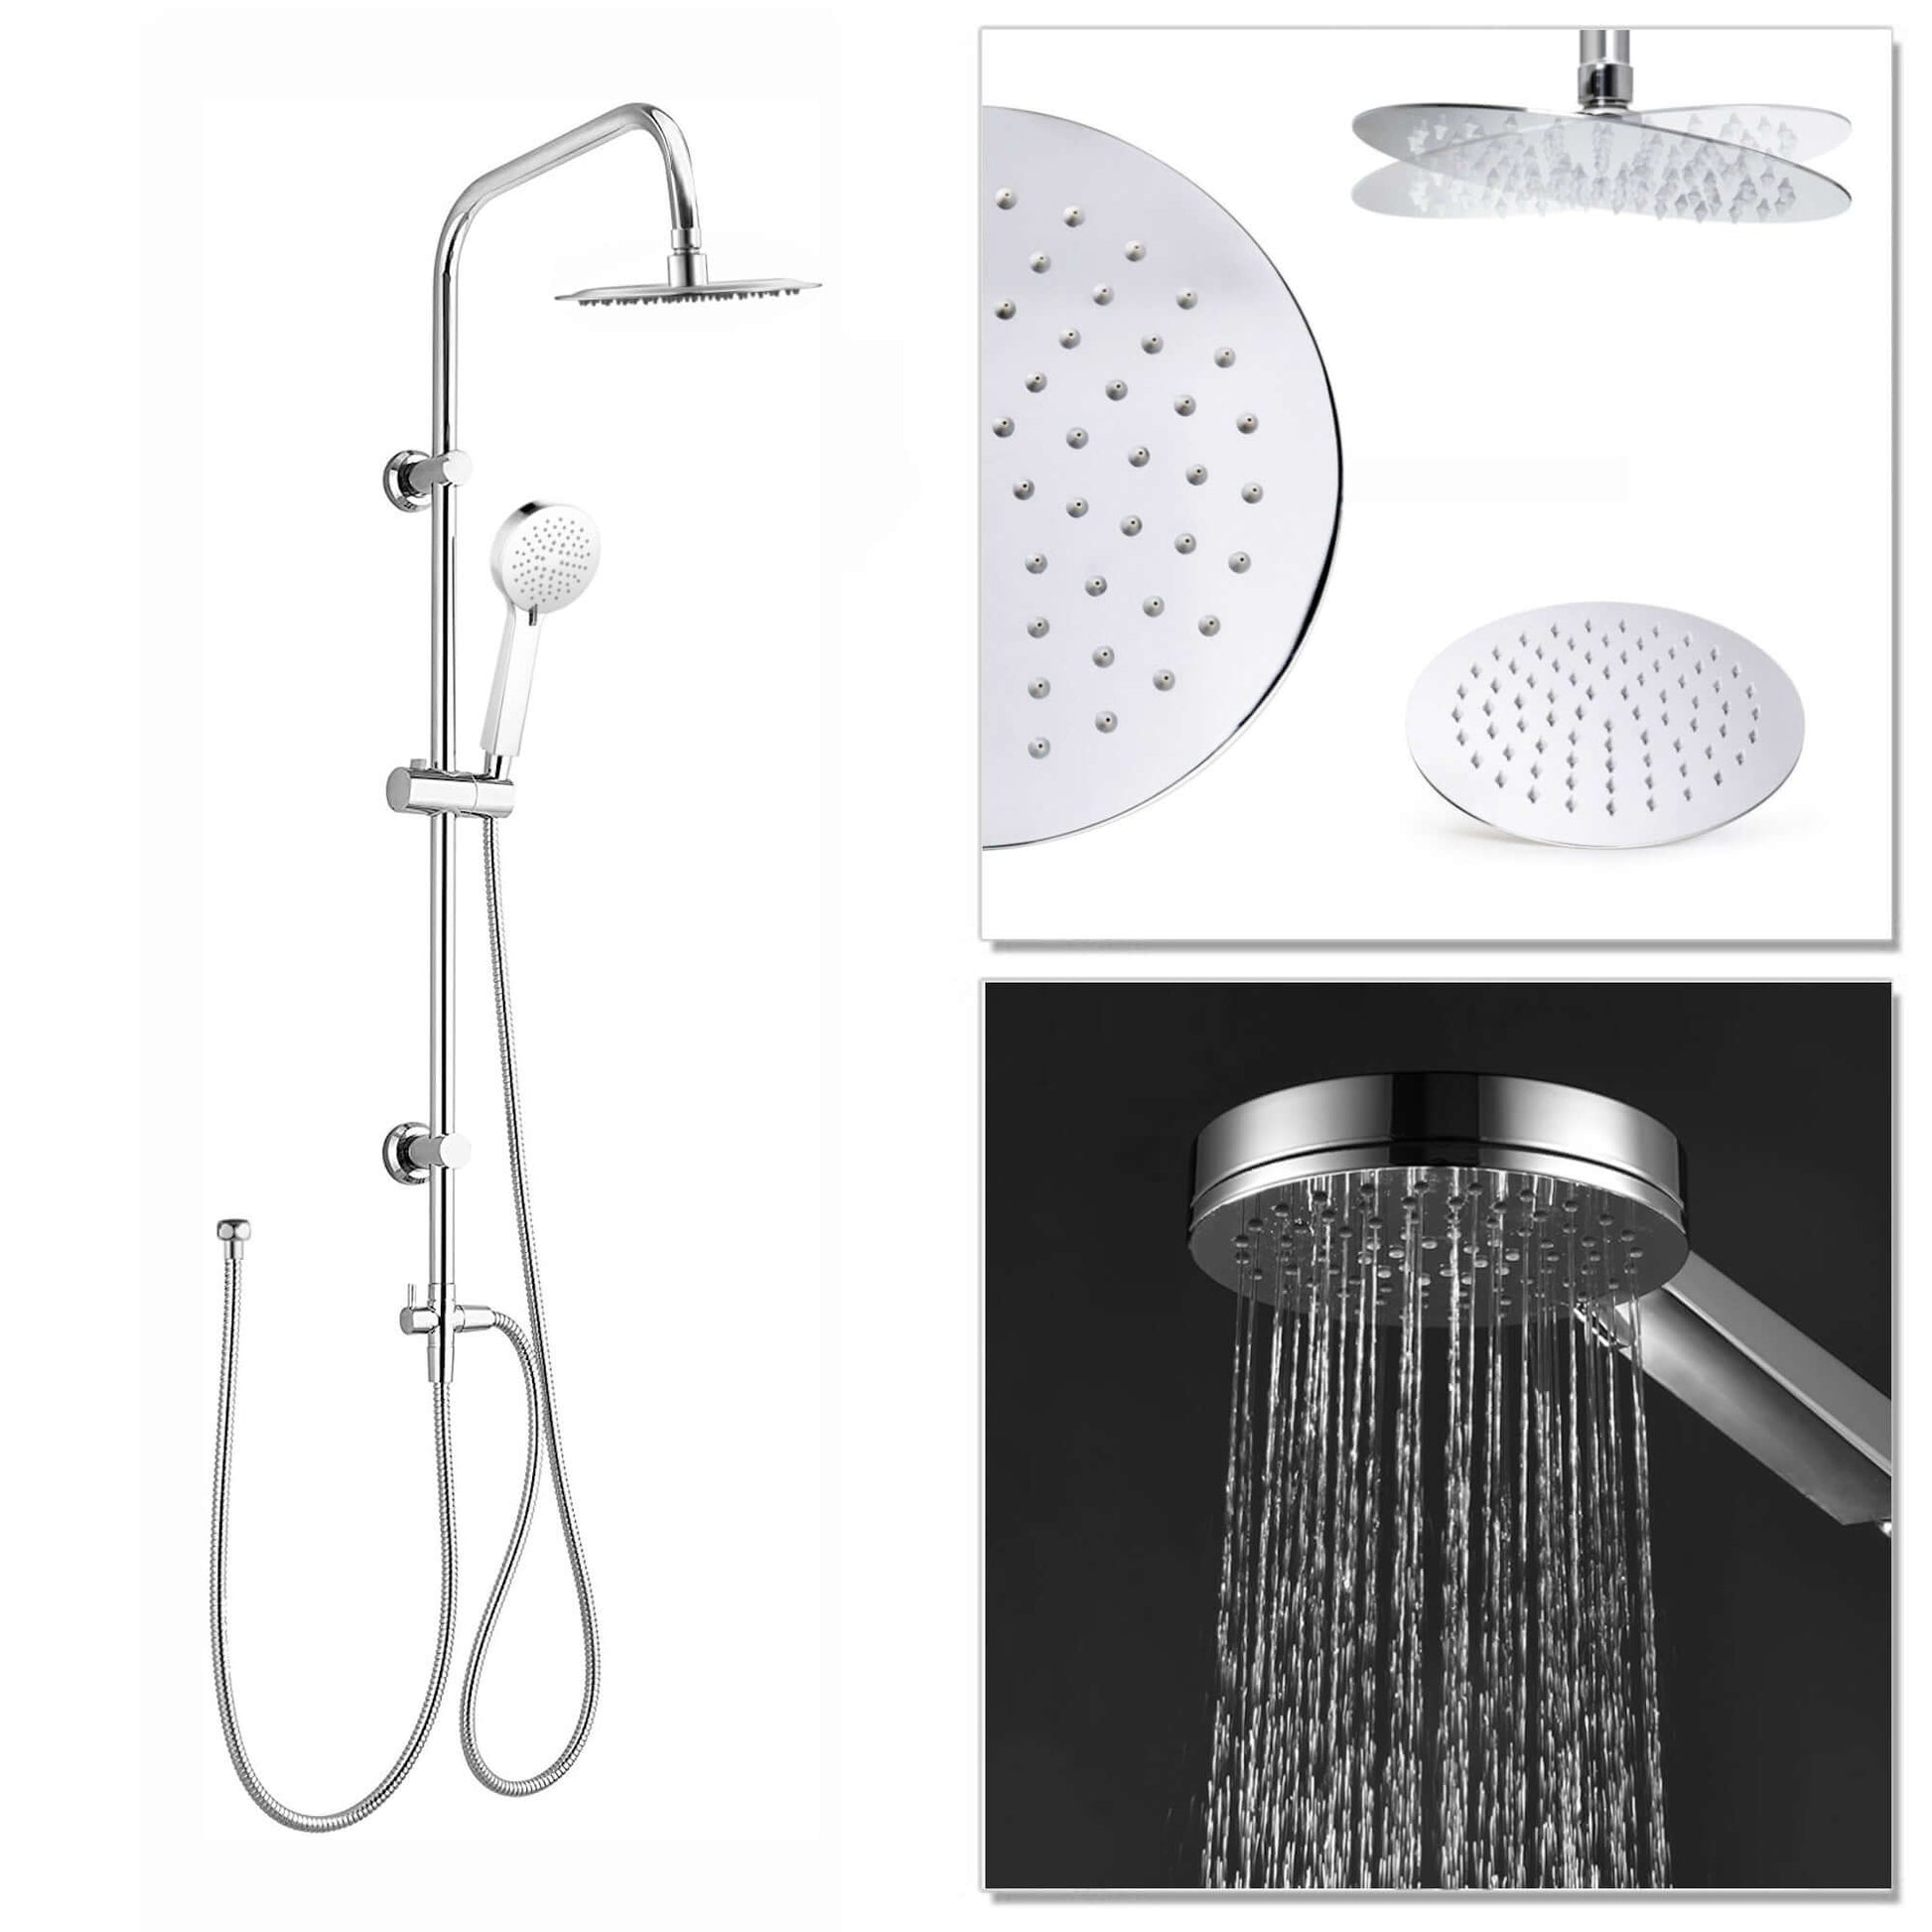 Dune thermostatic bar bath shower mixer valve with dual rigid riser kit, overhead rain shower and handheld - chrome - Showers